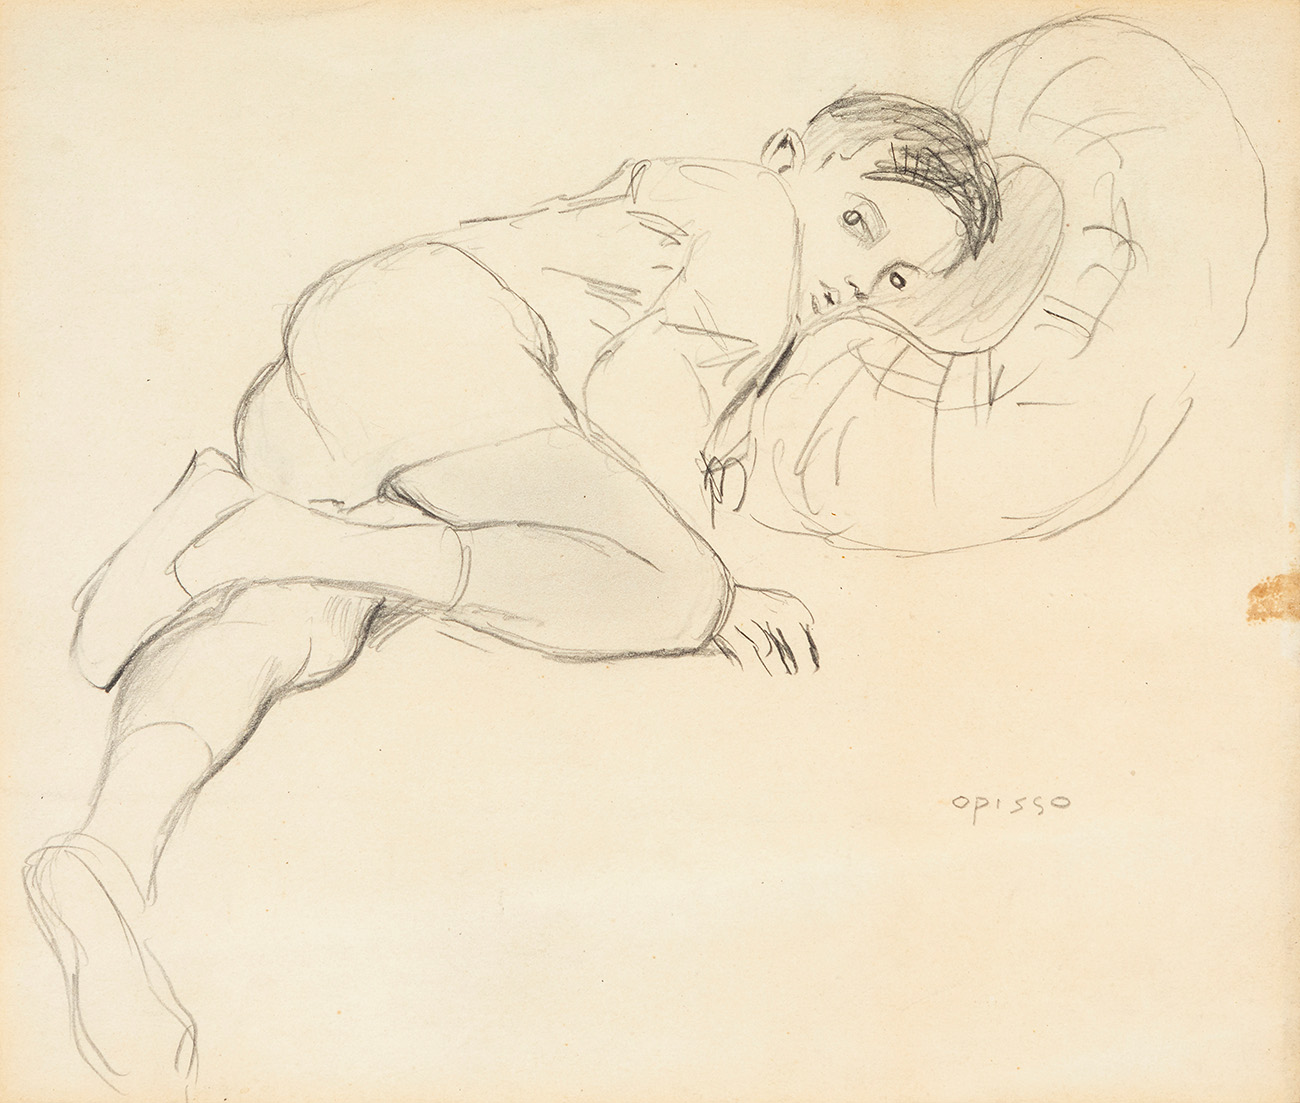 RICARDO OPISSO I SALA (Tarragona, 1880 - Barcelona, 1966)."Child resting".Pencil on paper.Signed